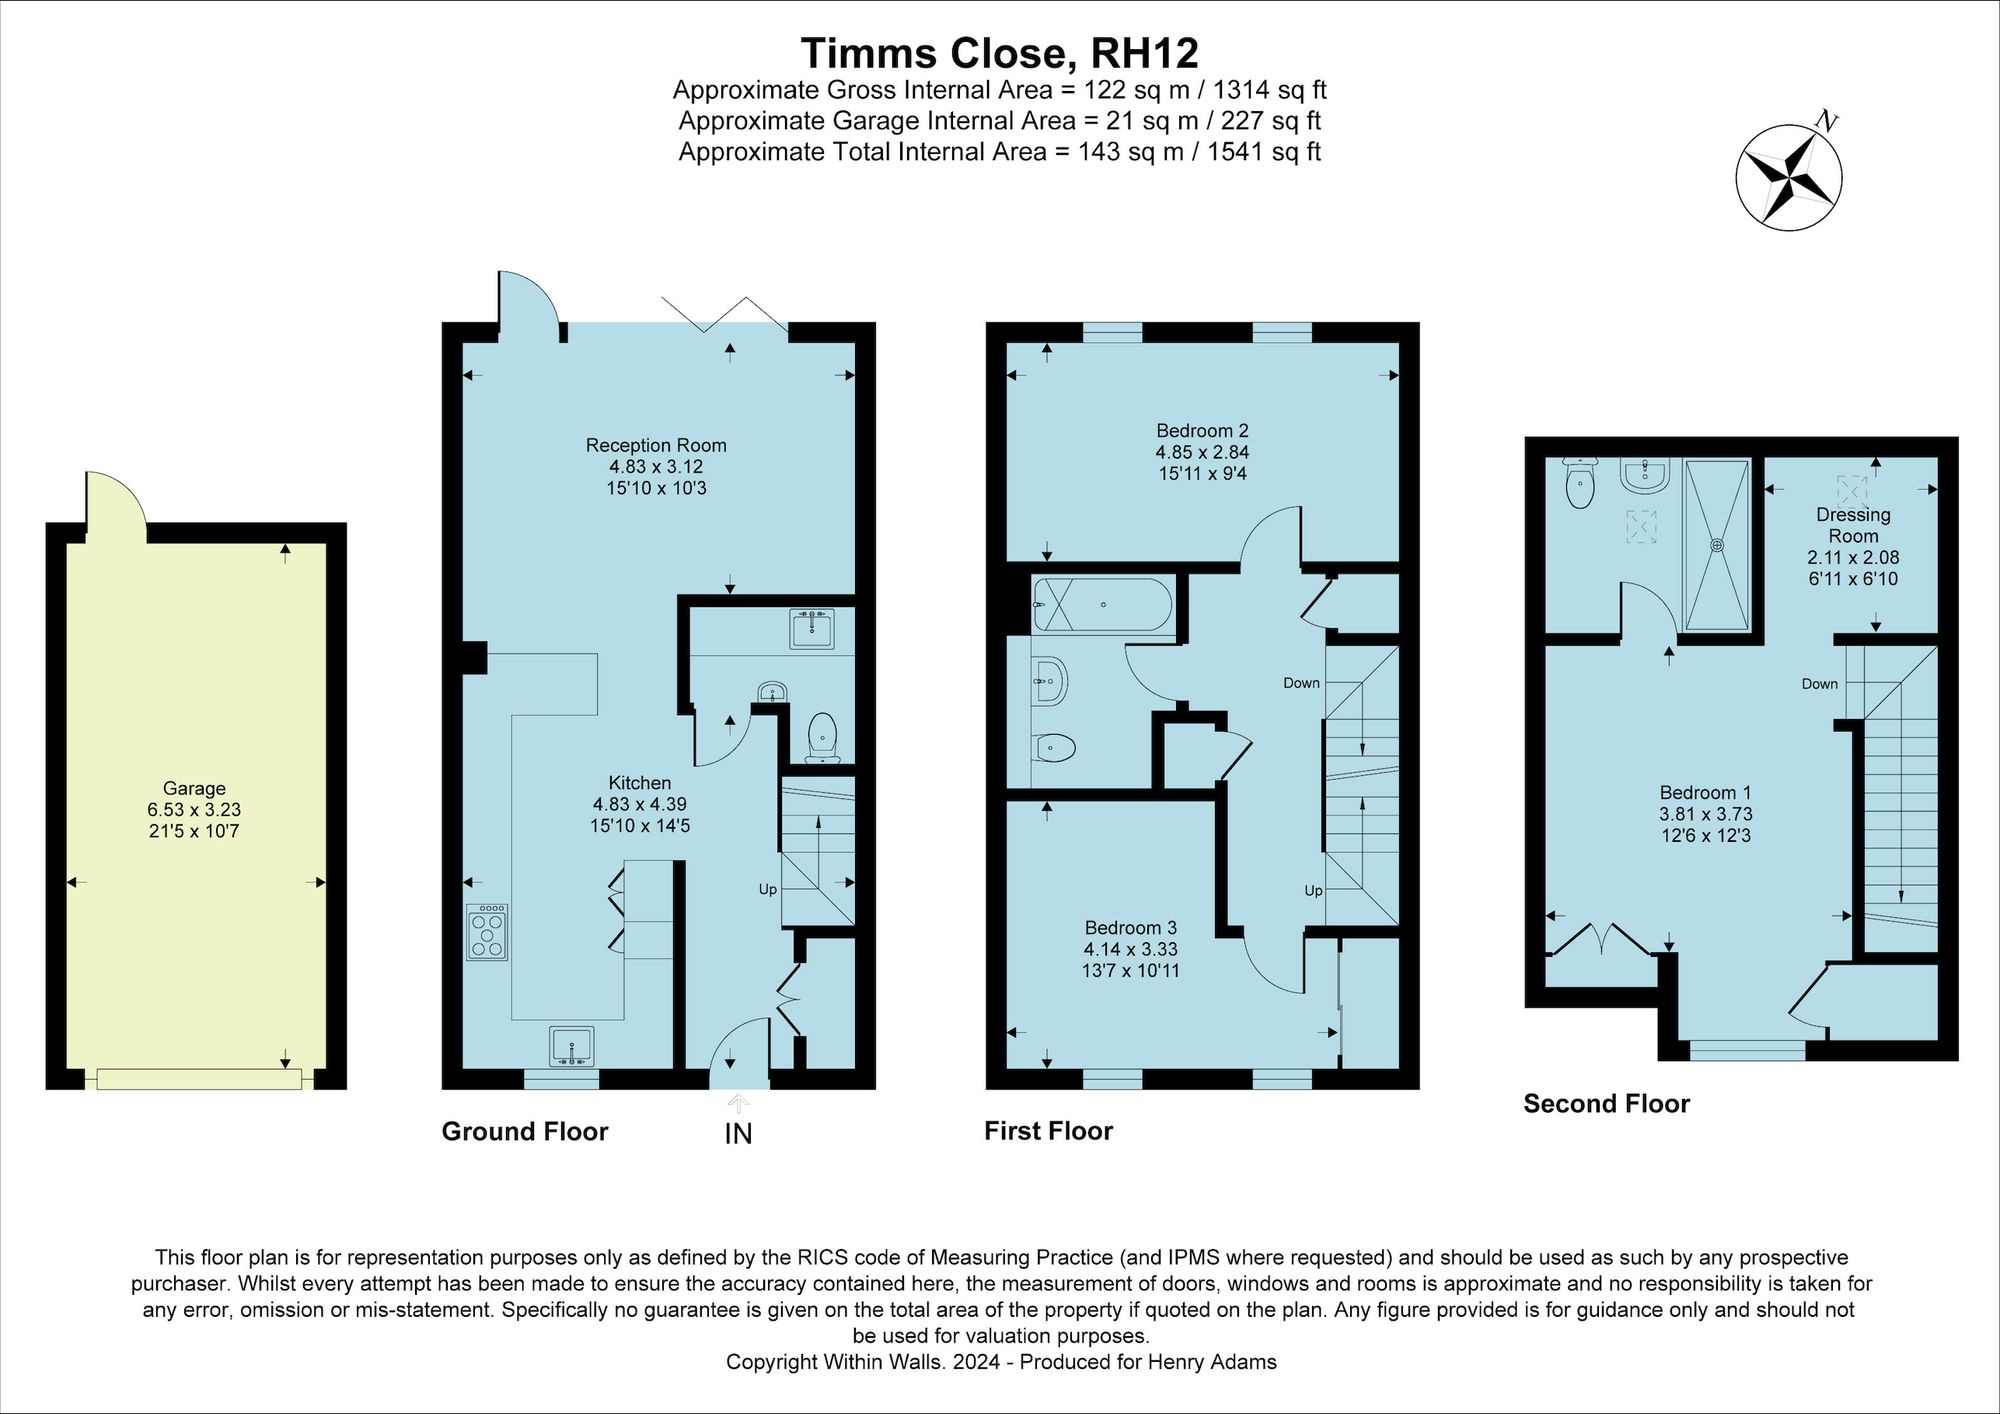 Timms Close, Horsham, RH12 floorplans